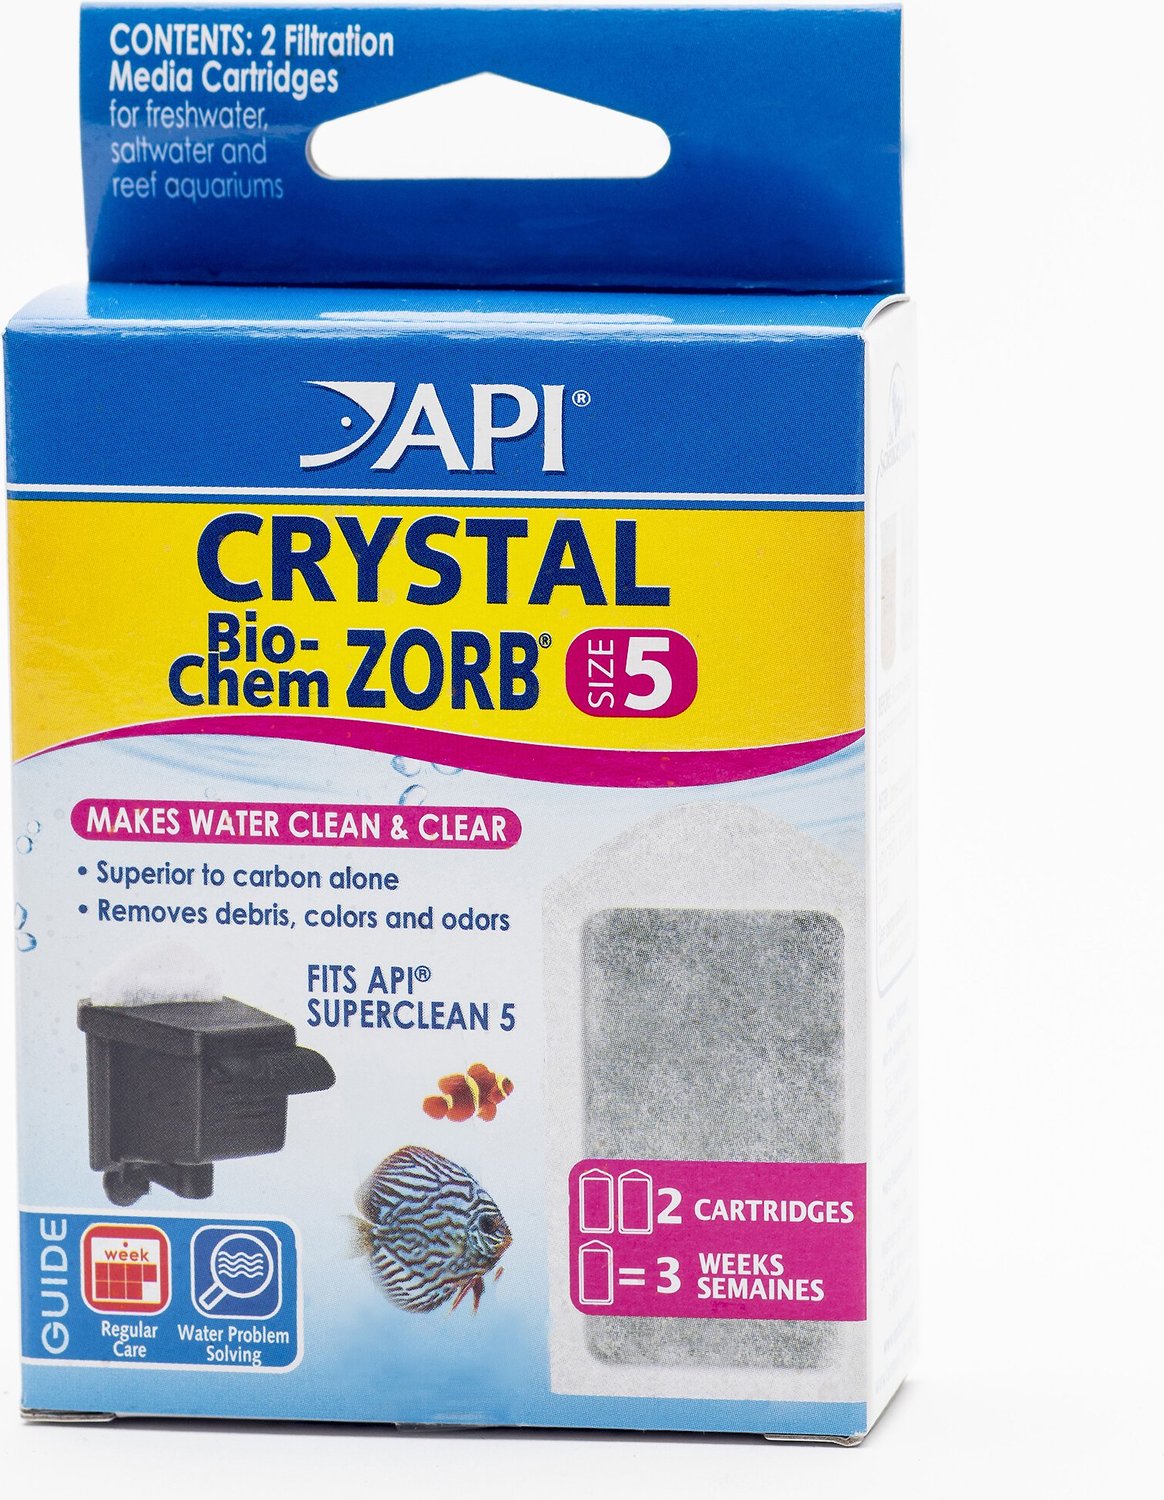 API CRYSTAL BIO-CHEM ZORB SIZE 4 Aquarium Filtration Media Cartridges NEXX filters 4-Count Box